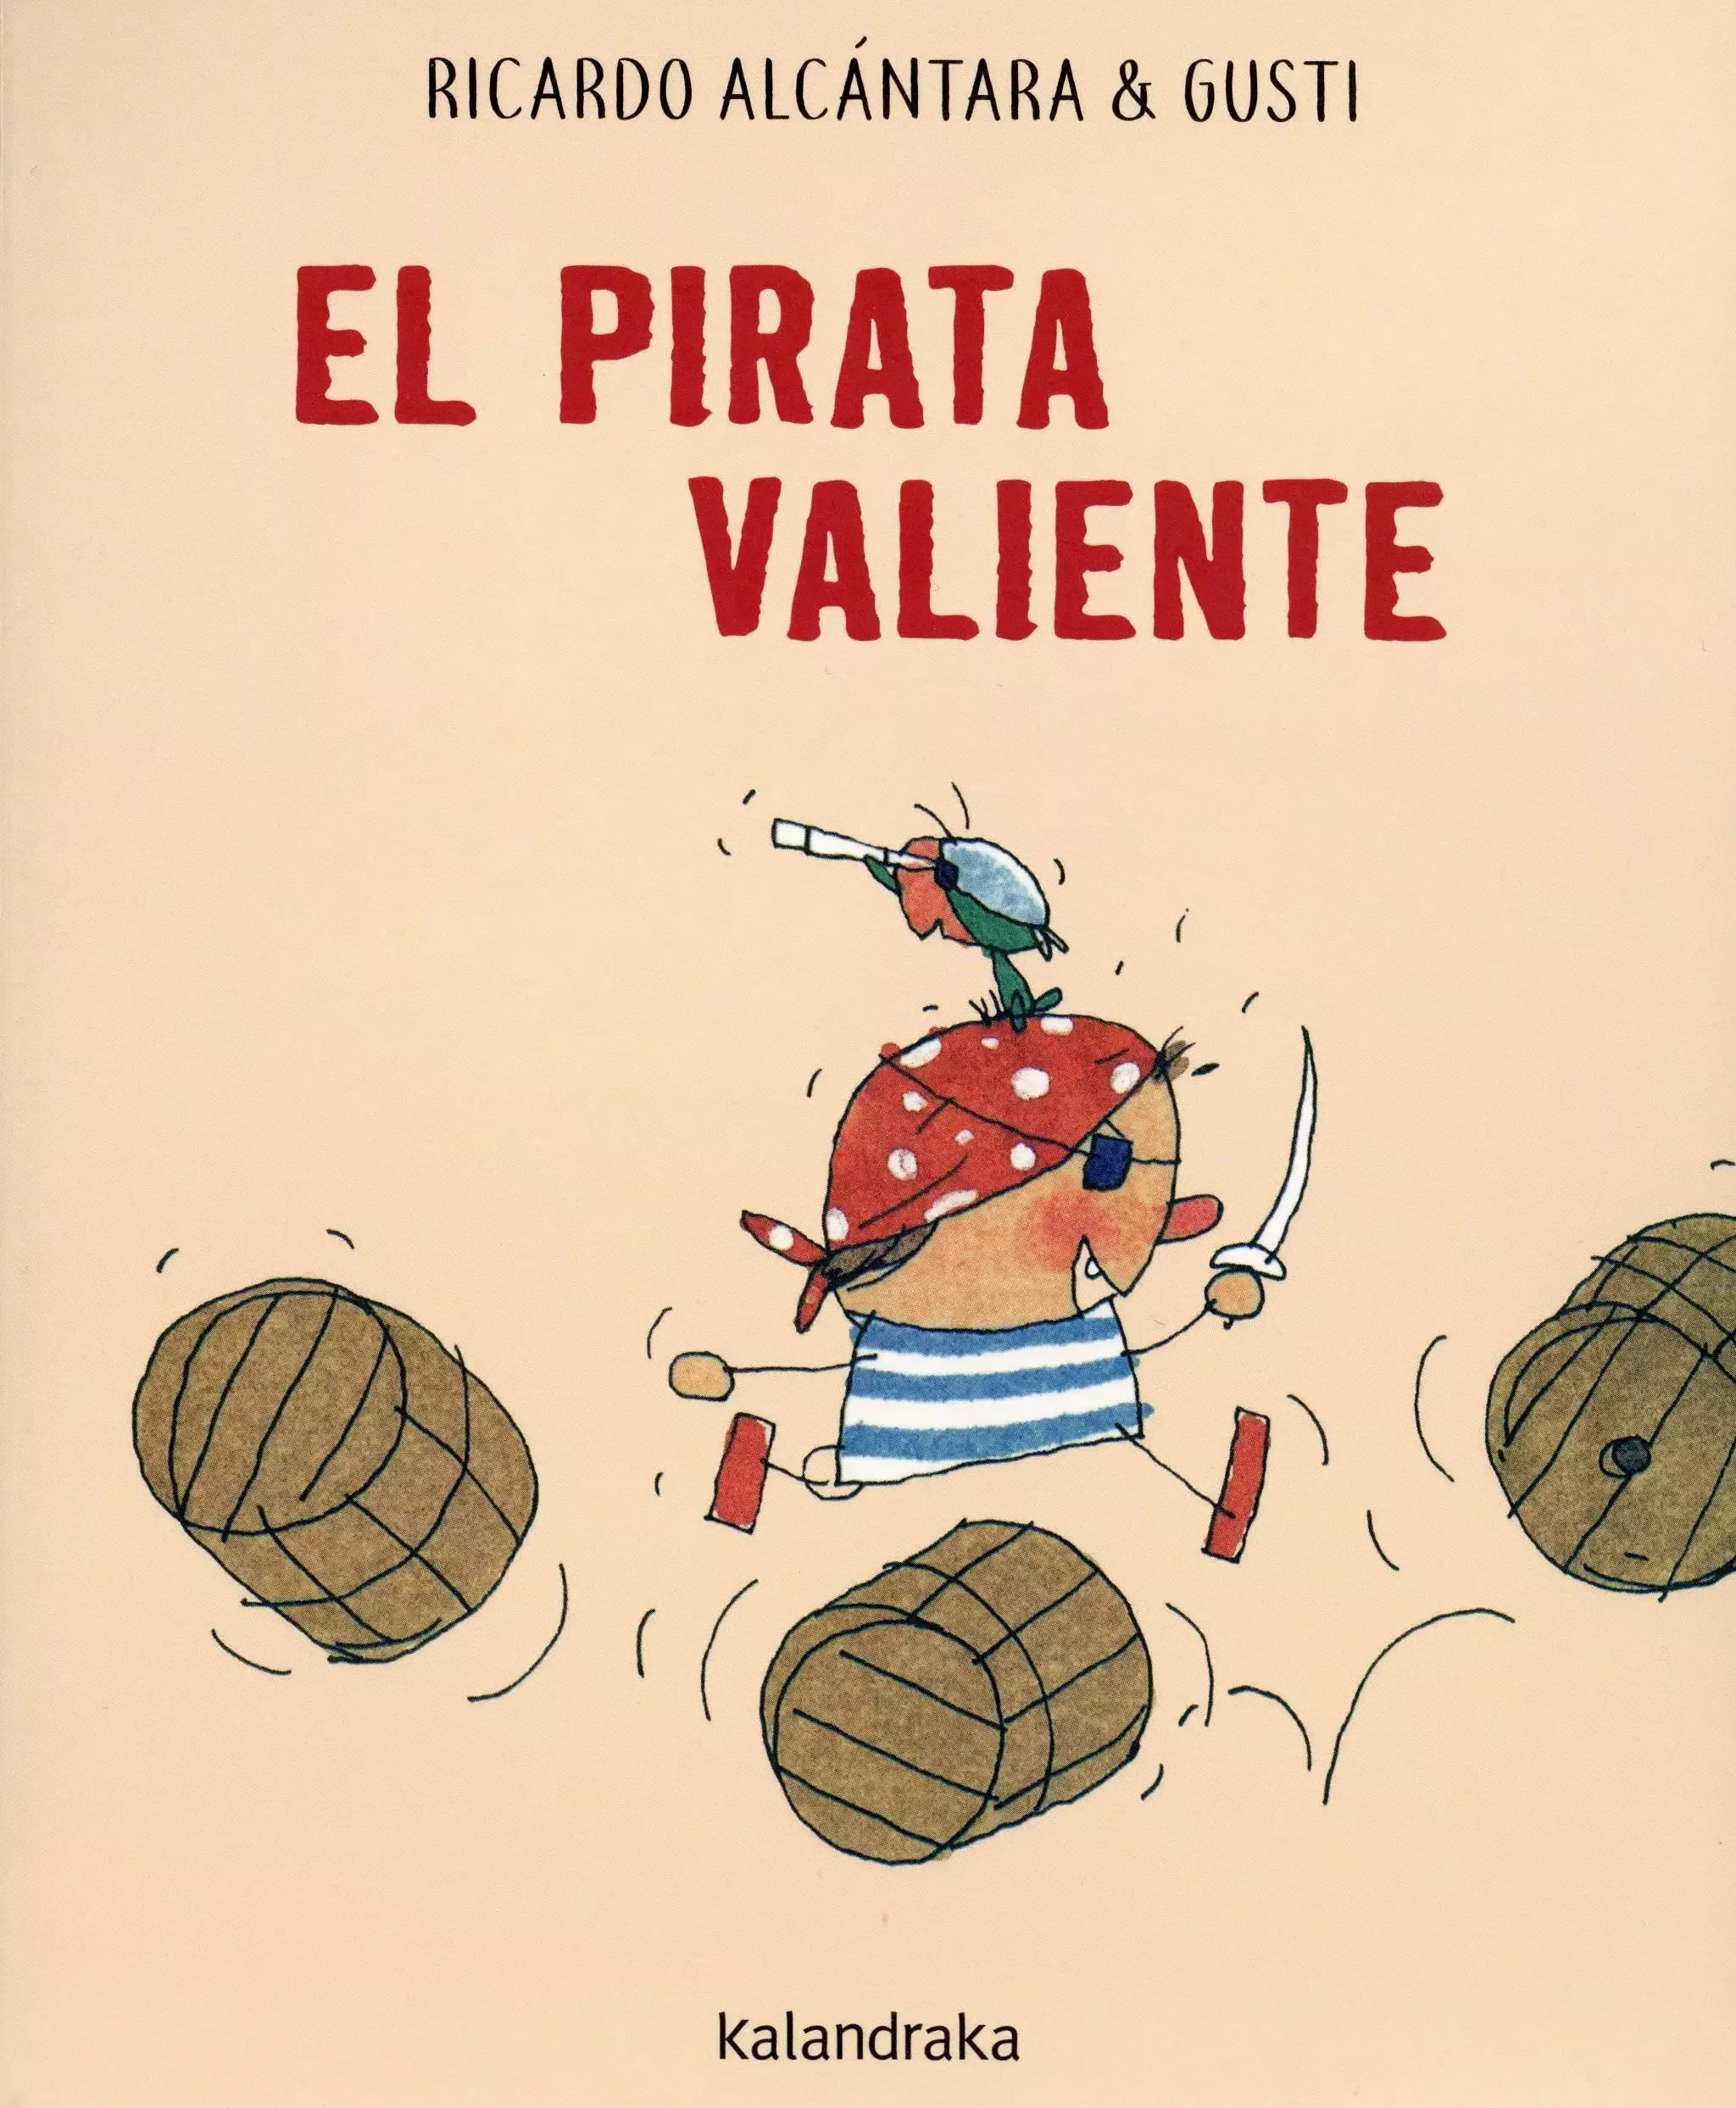 El pirata valiente cover